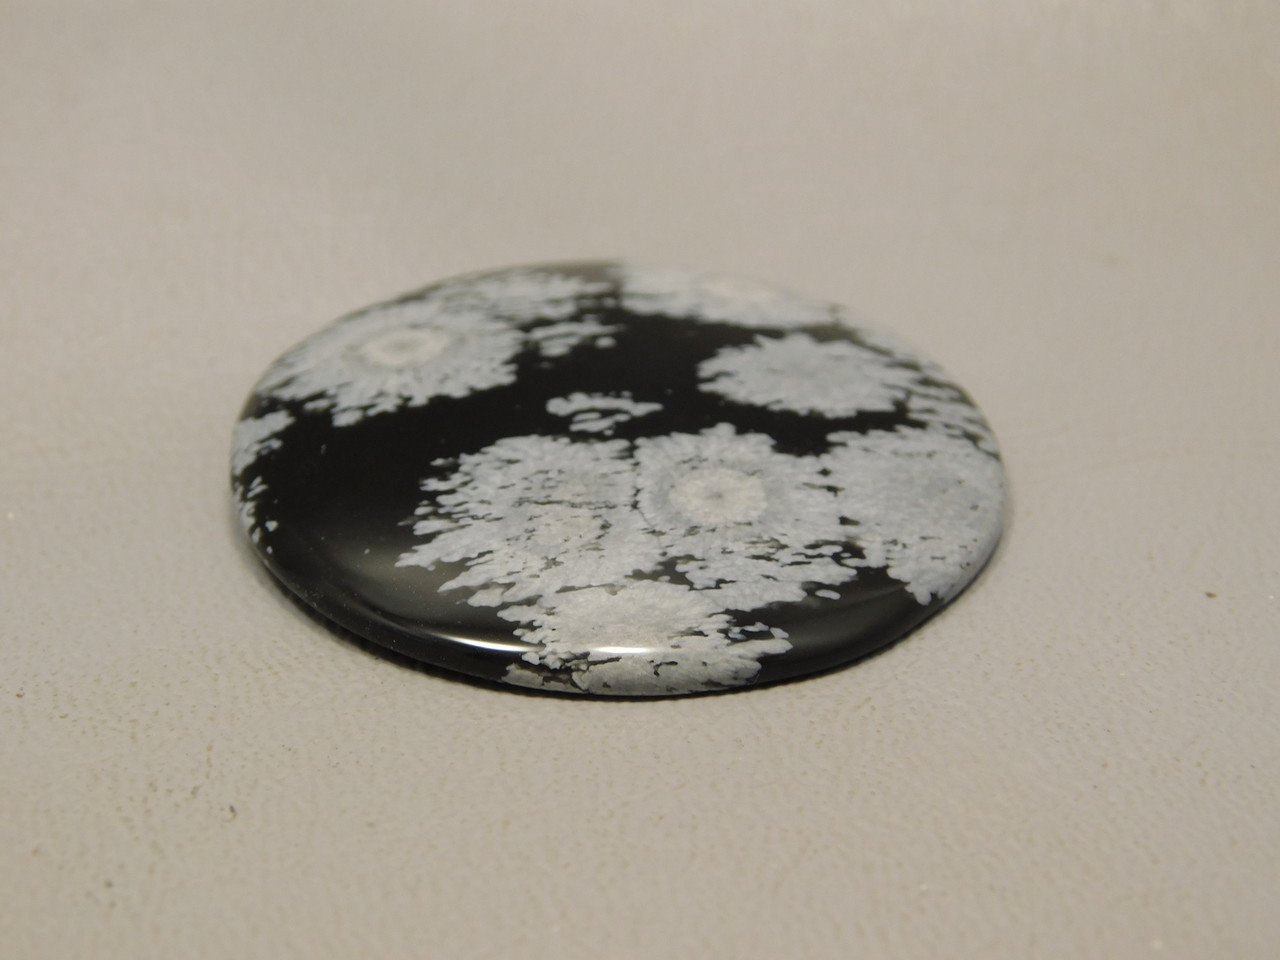 Snowflake Obsidian Cabochon 39 mm Round Stone #6